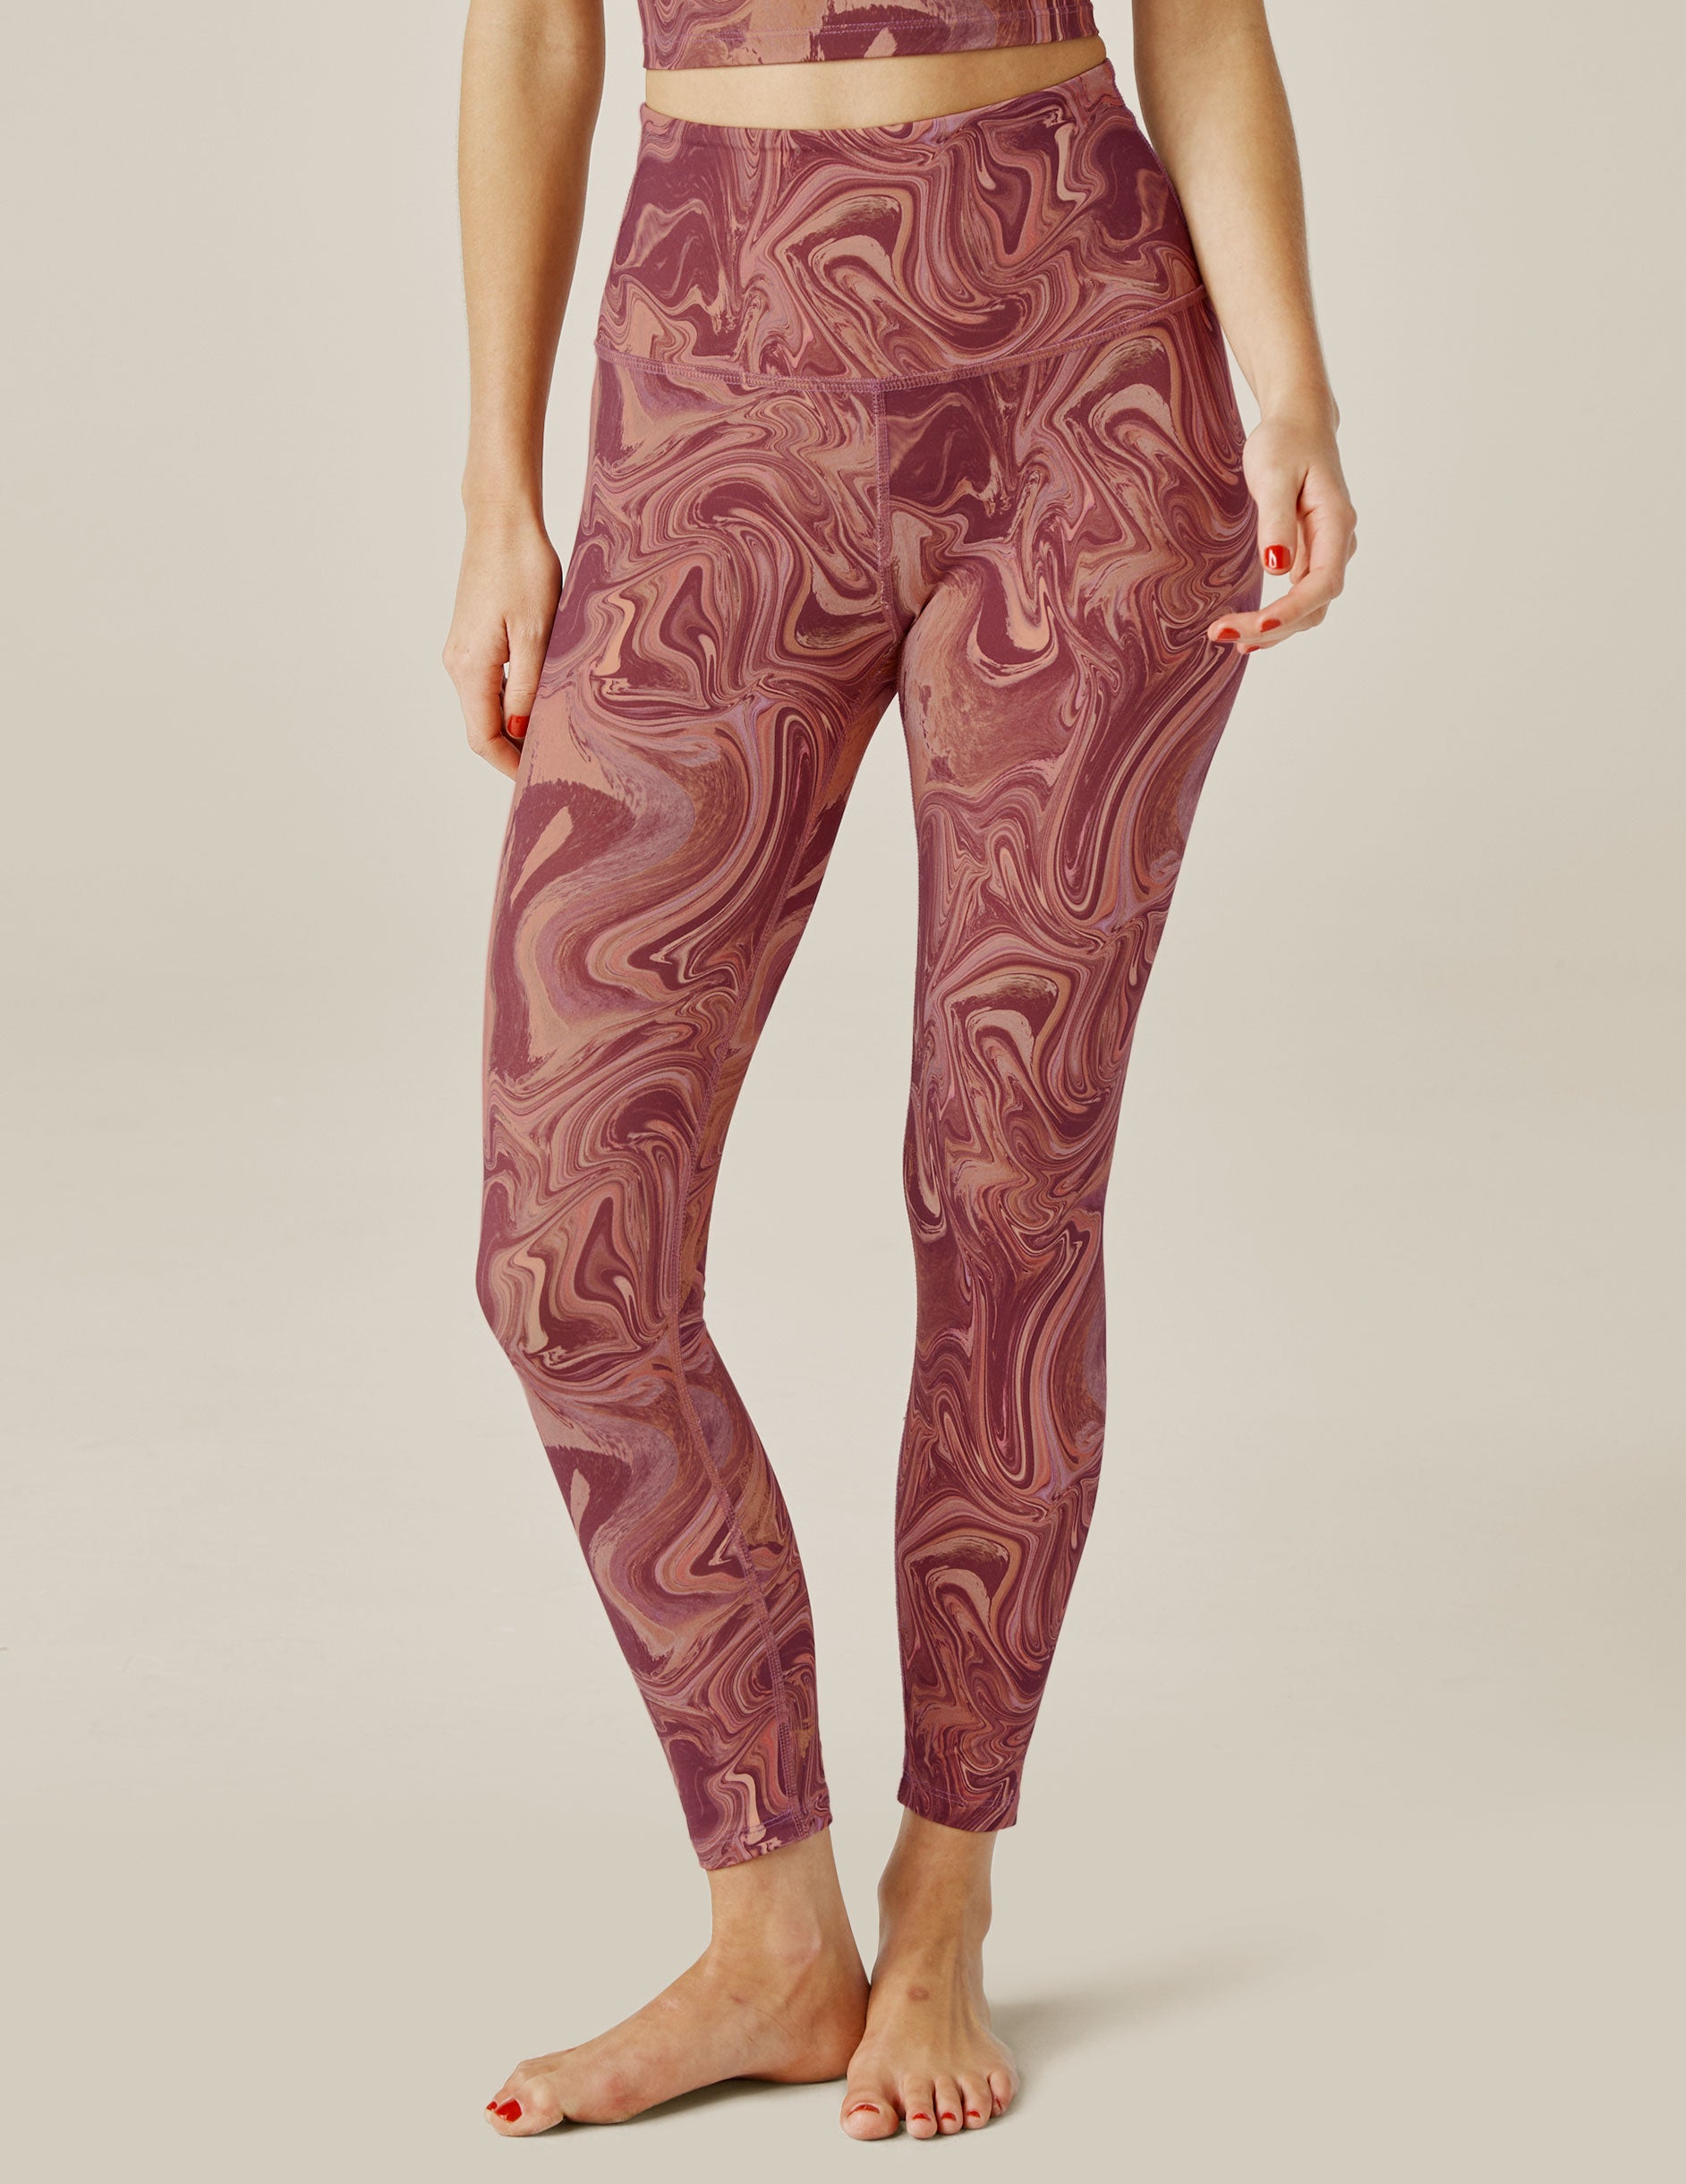 Serenity Lucy Light Grey Floral Print Leggings Yoga Pants - Women